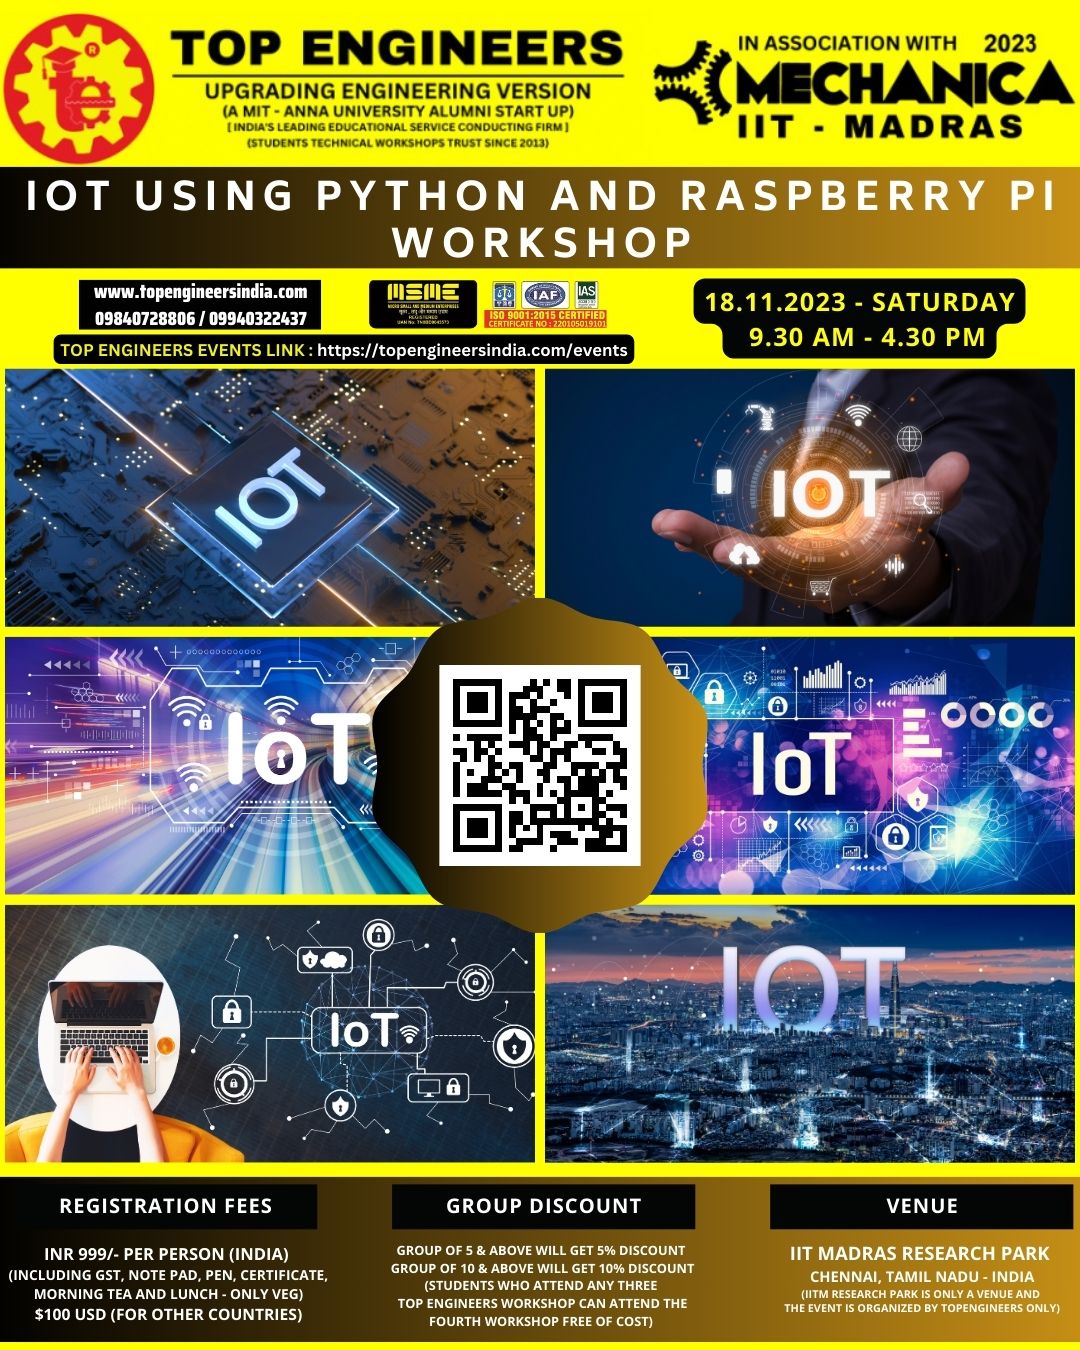 IoT using Python and Raspberry Pi Workshop 2023